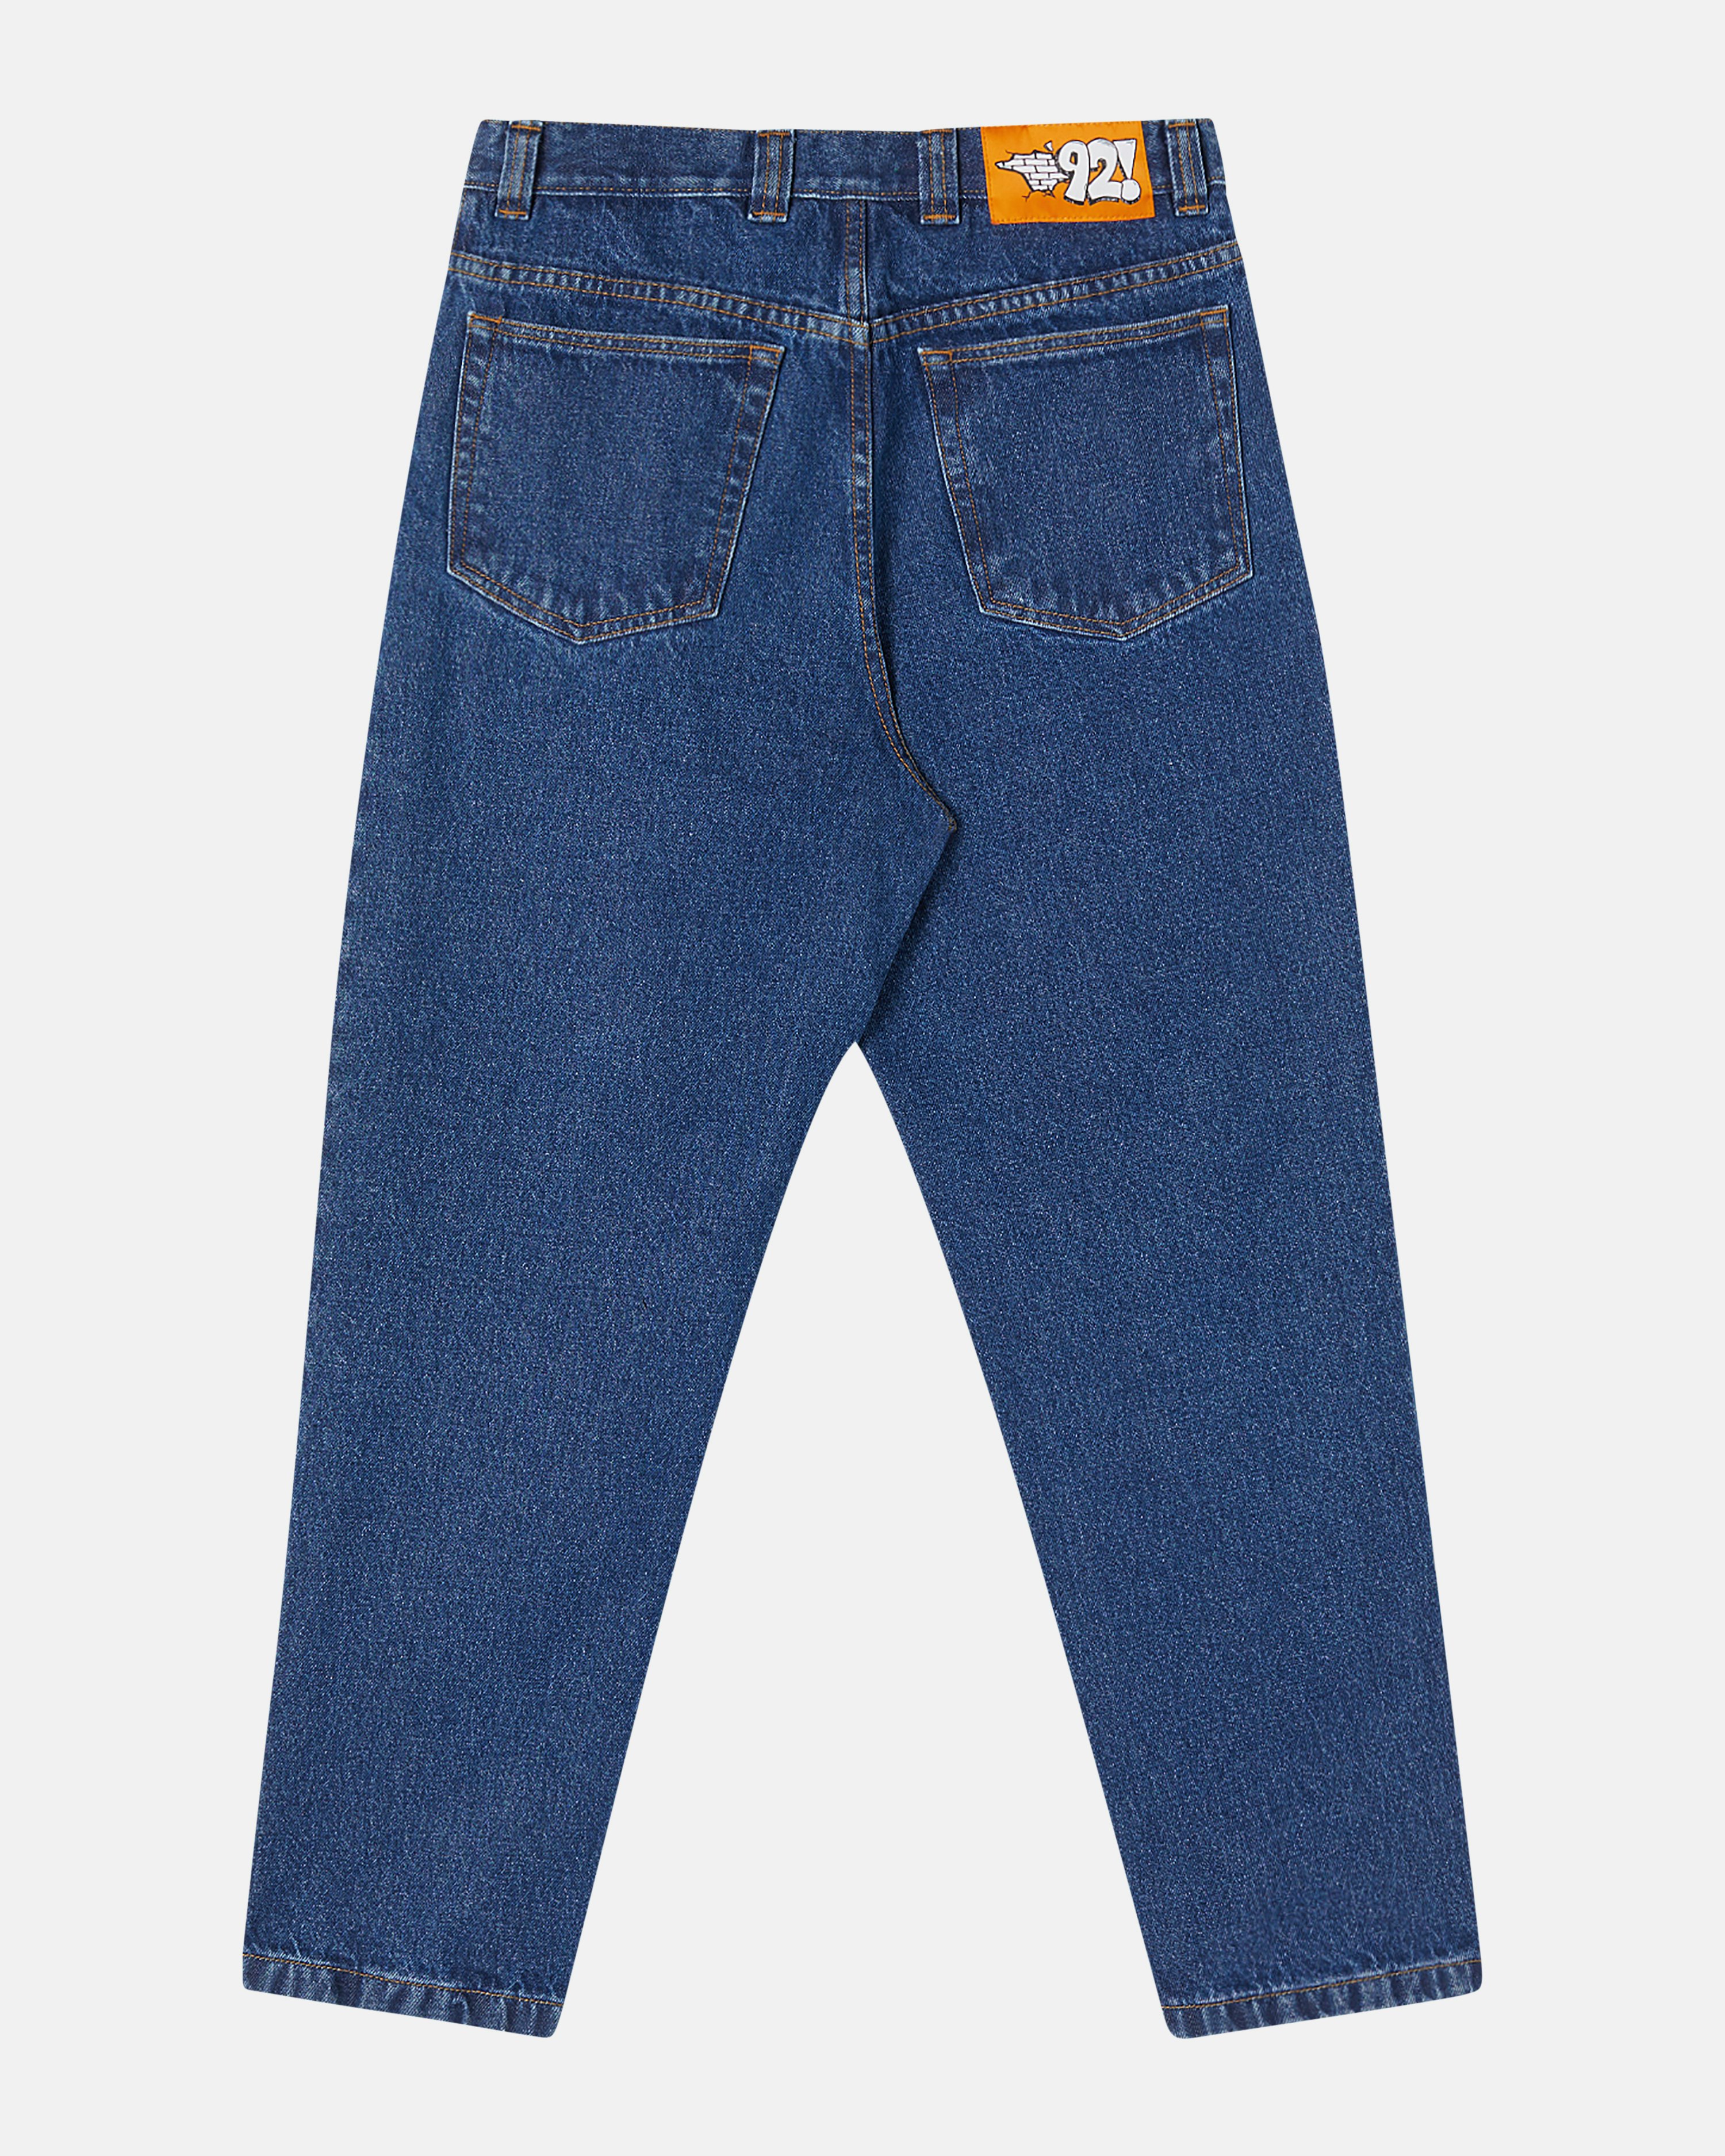 Polar Skate Co. Jeans - 92! Dark blue | Men | Junkyard